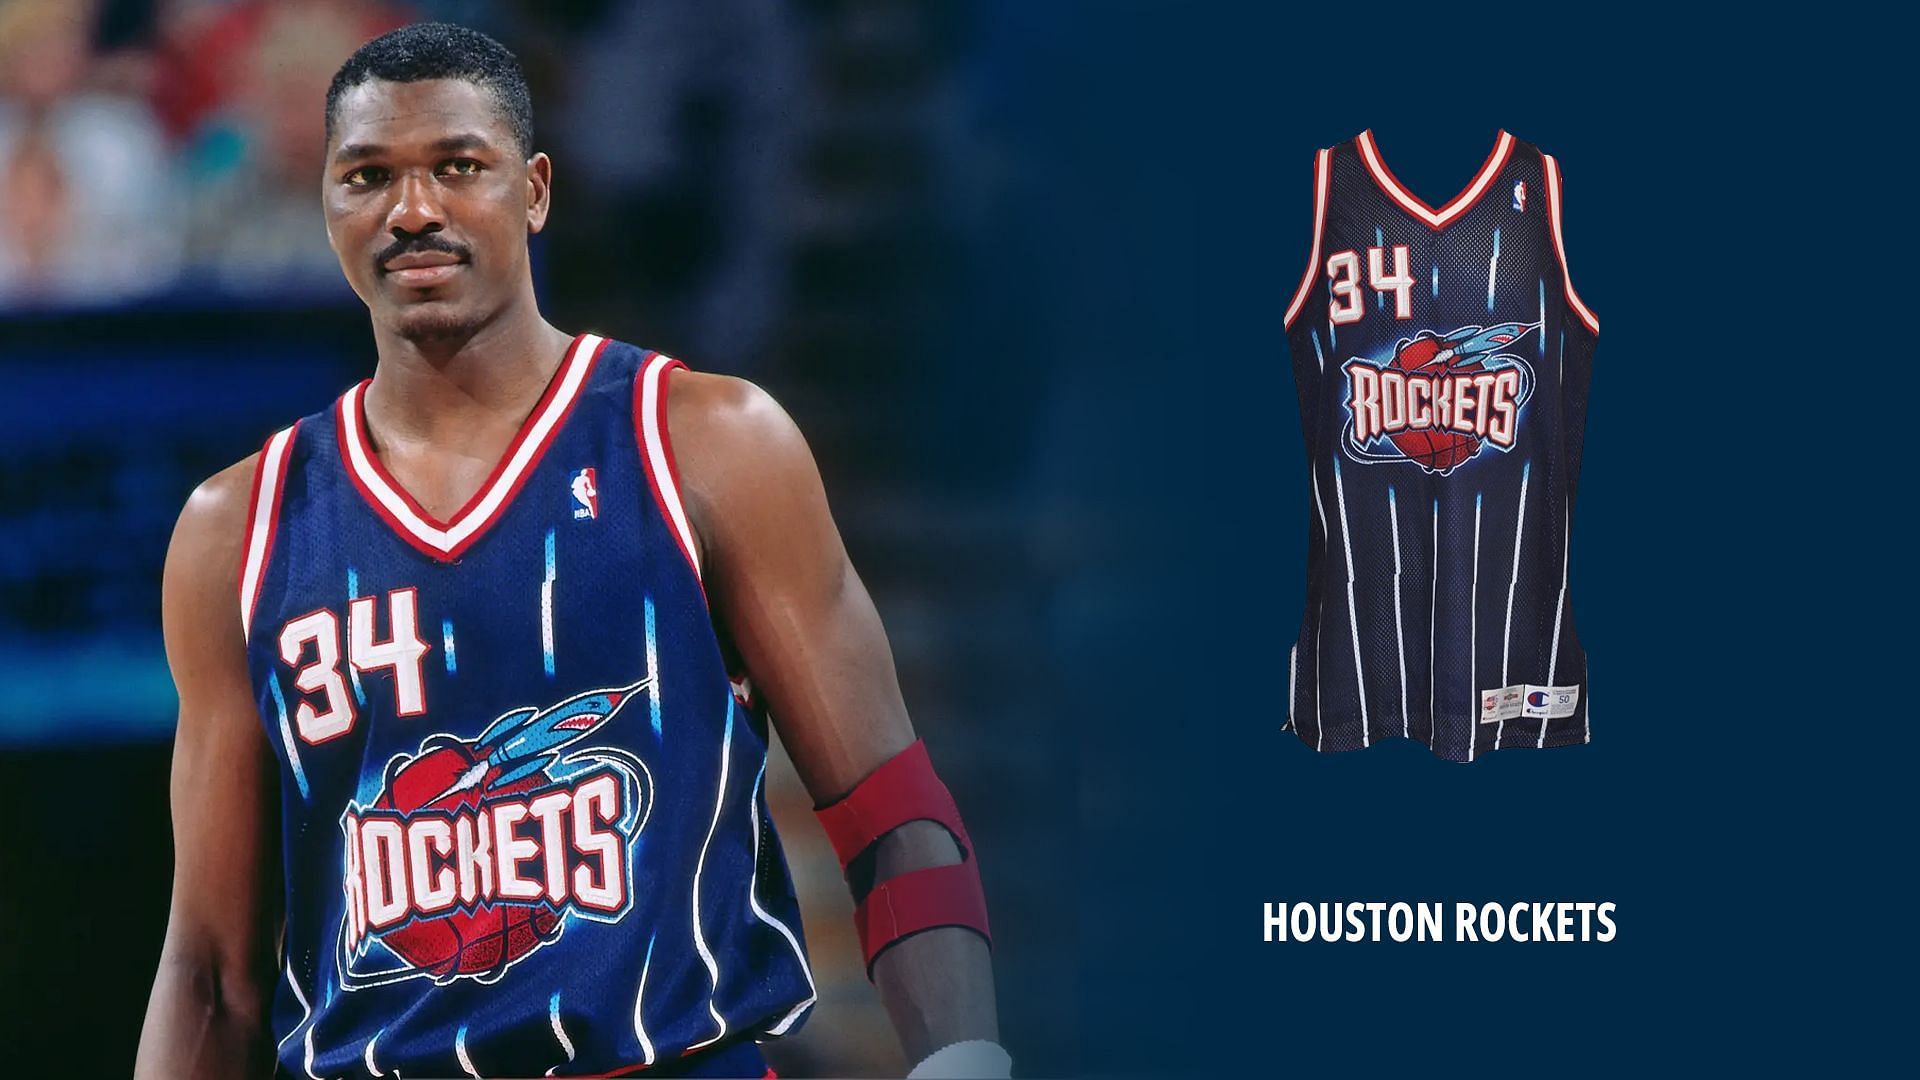 Houston Rockets Black #7 NBA Jersey,Houston Rockets